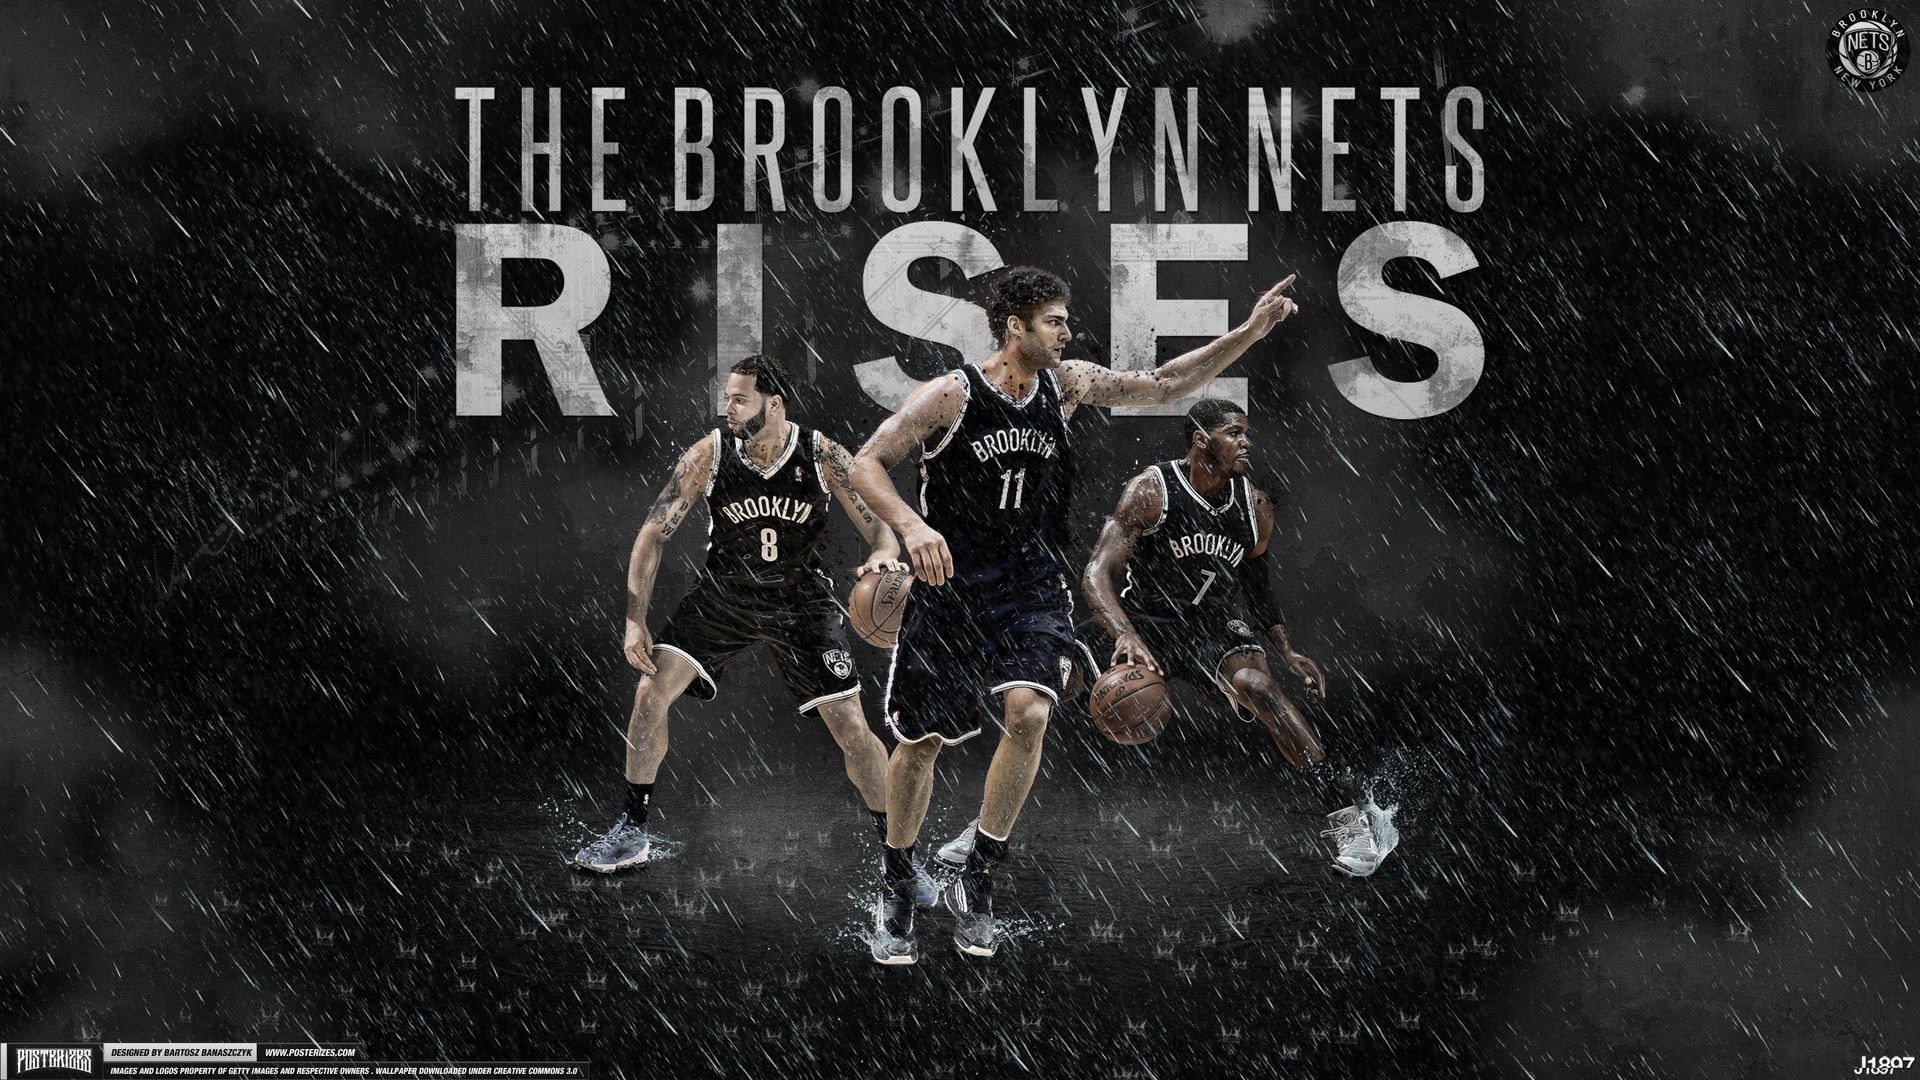 HD Quality Wallpaper: Free Brooklyn Nets Image For Desktop, Free